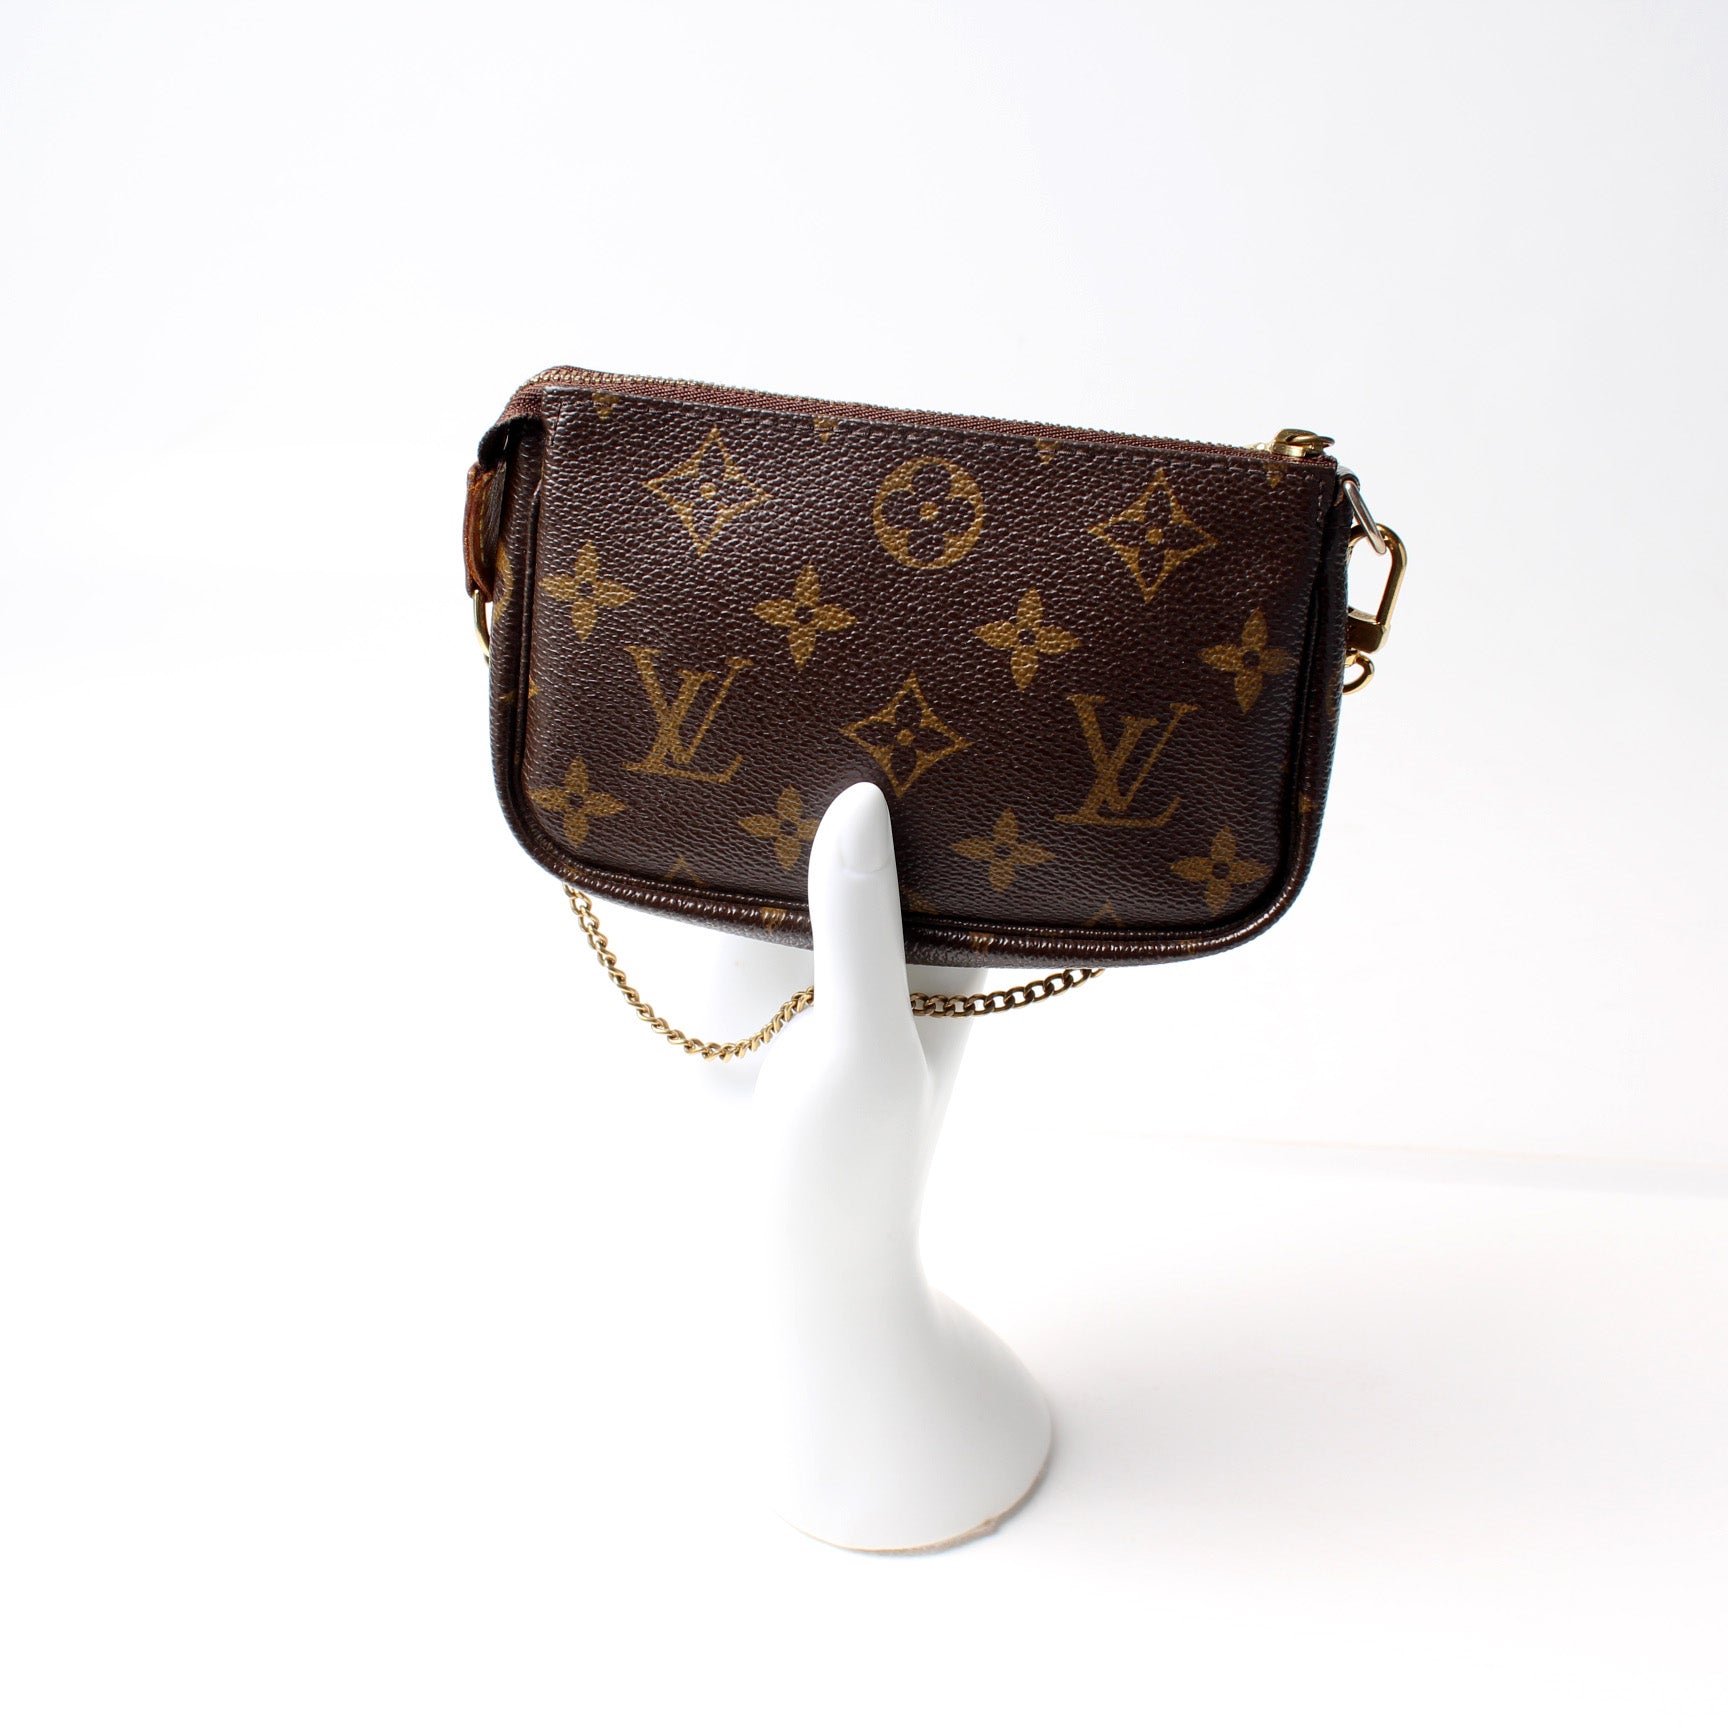 Fashionphile - Louis Vuitton's Mini Pochette Accessories always